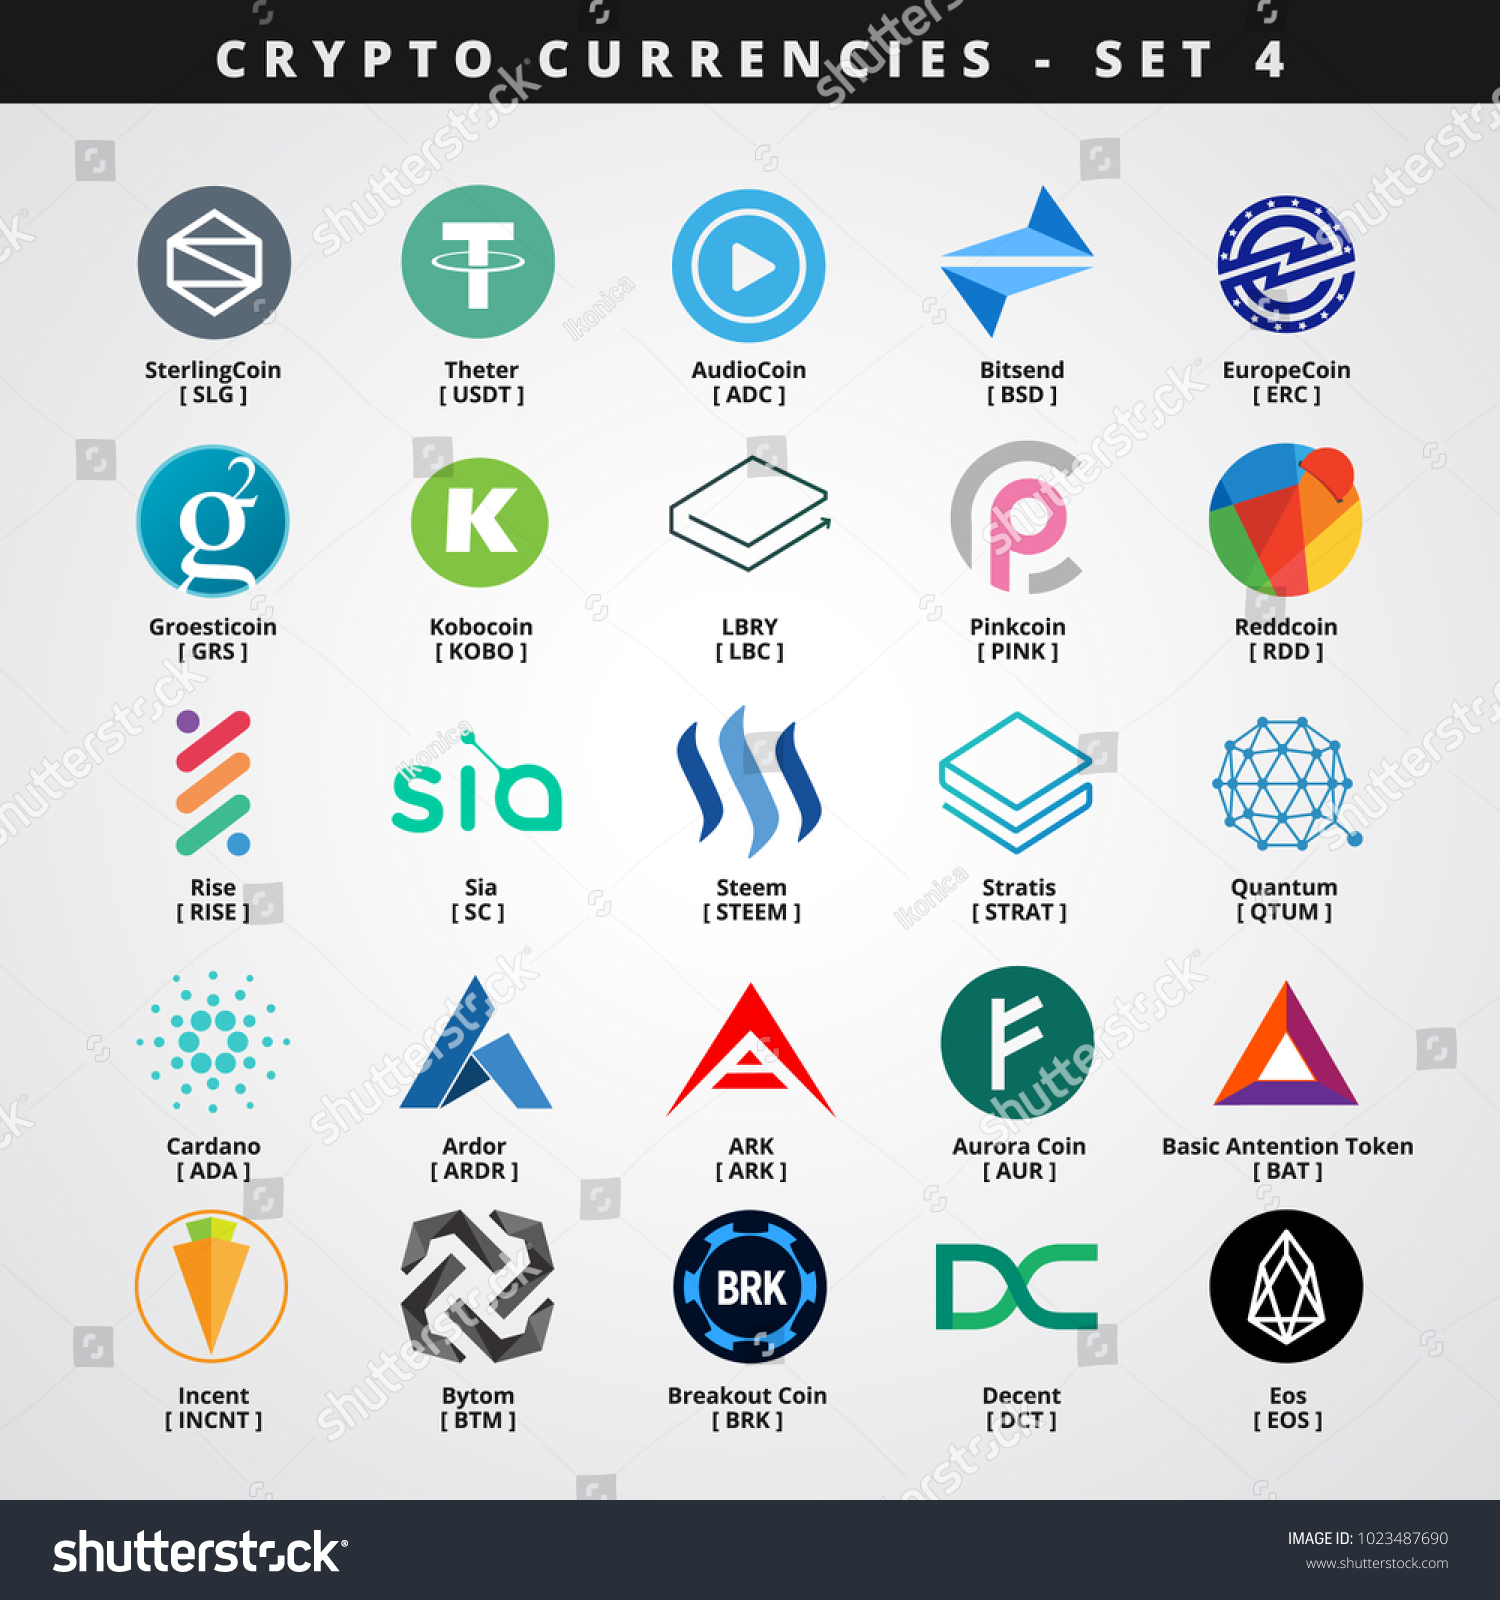 SVG of Cryptocurrencies - SET 4 svg